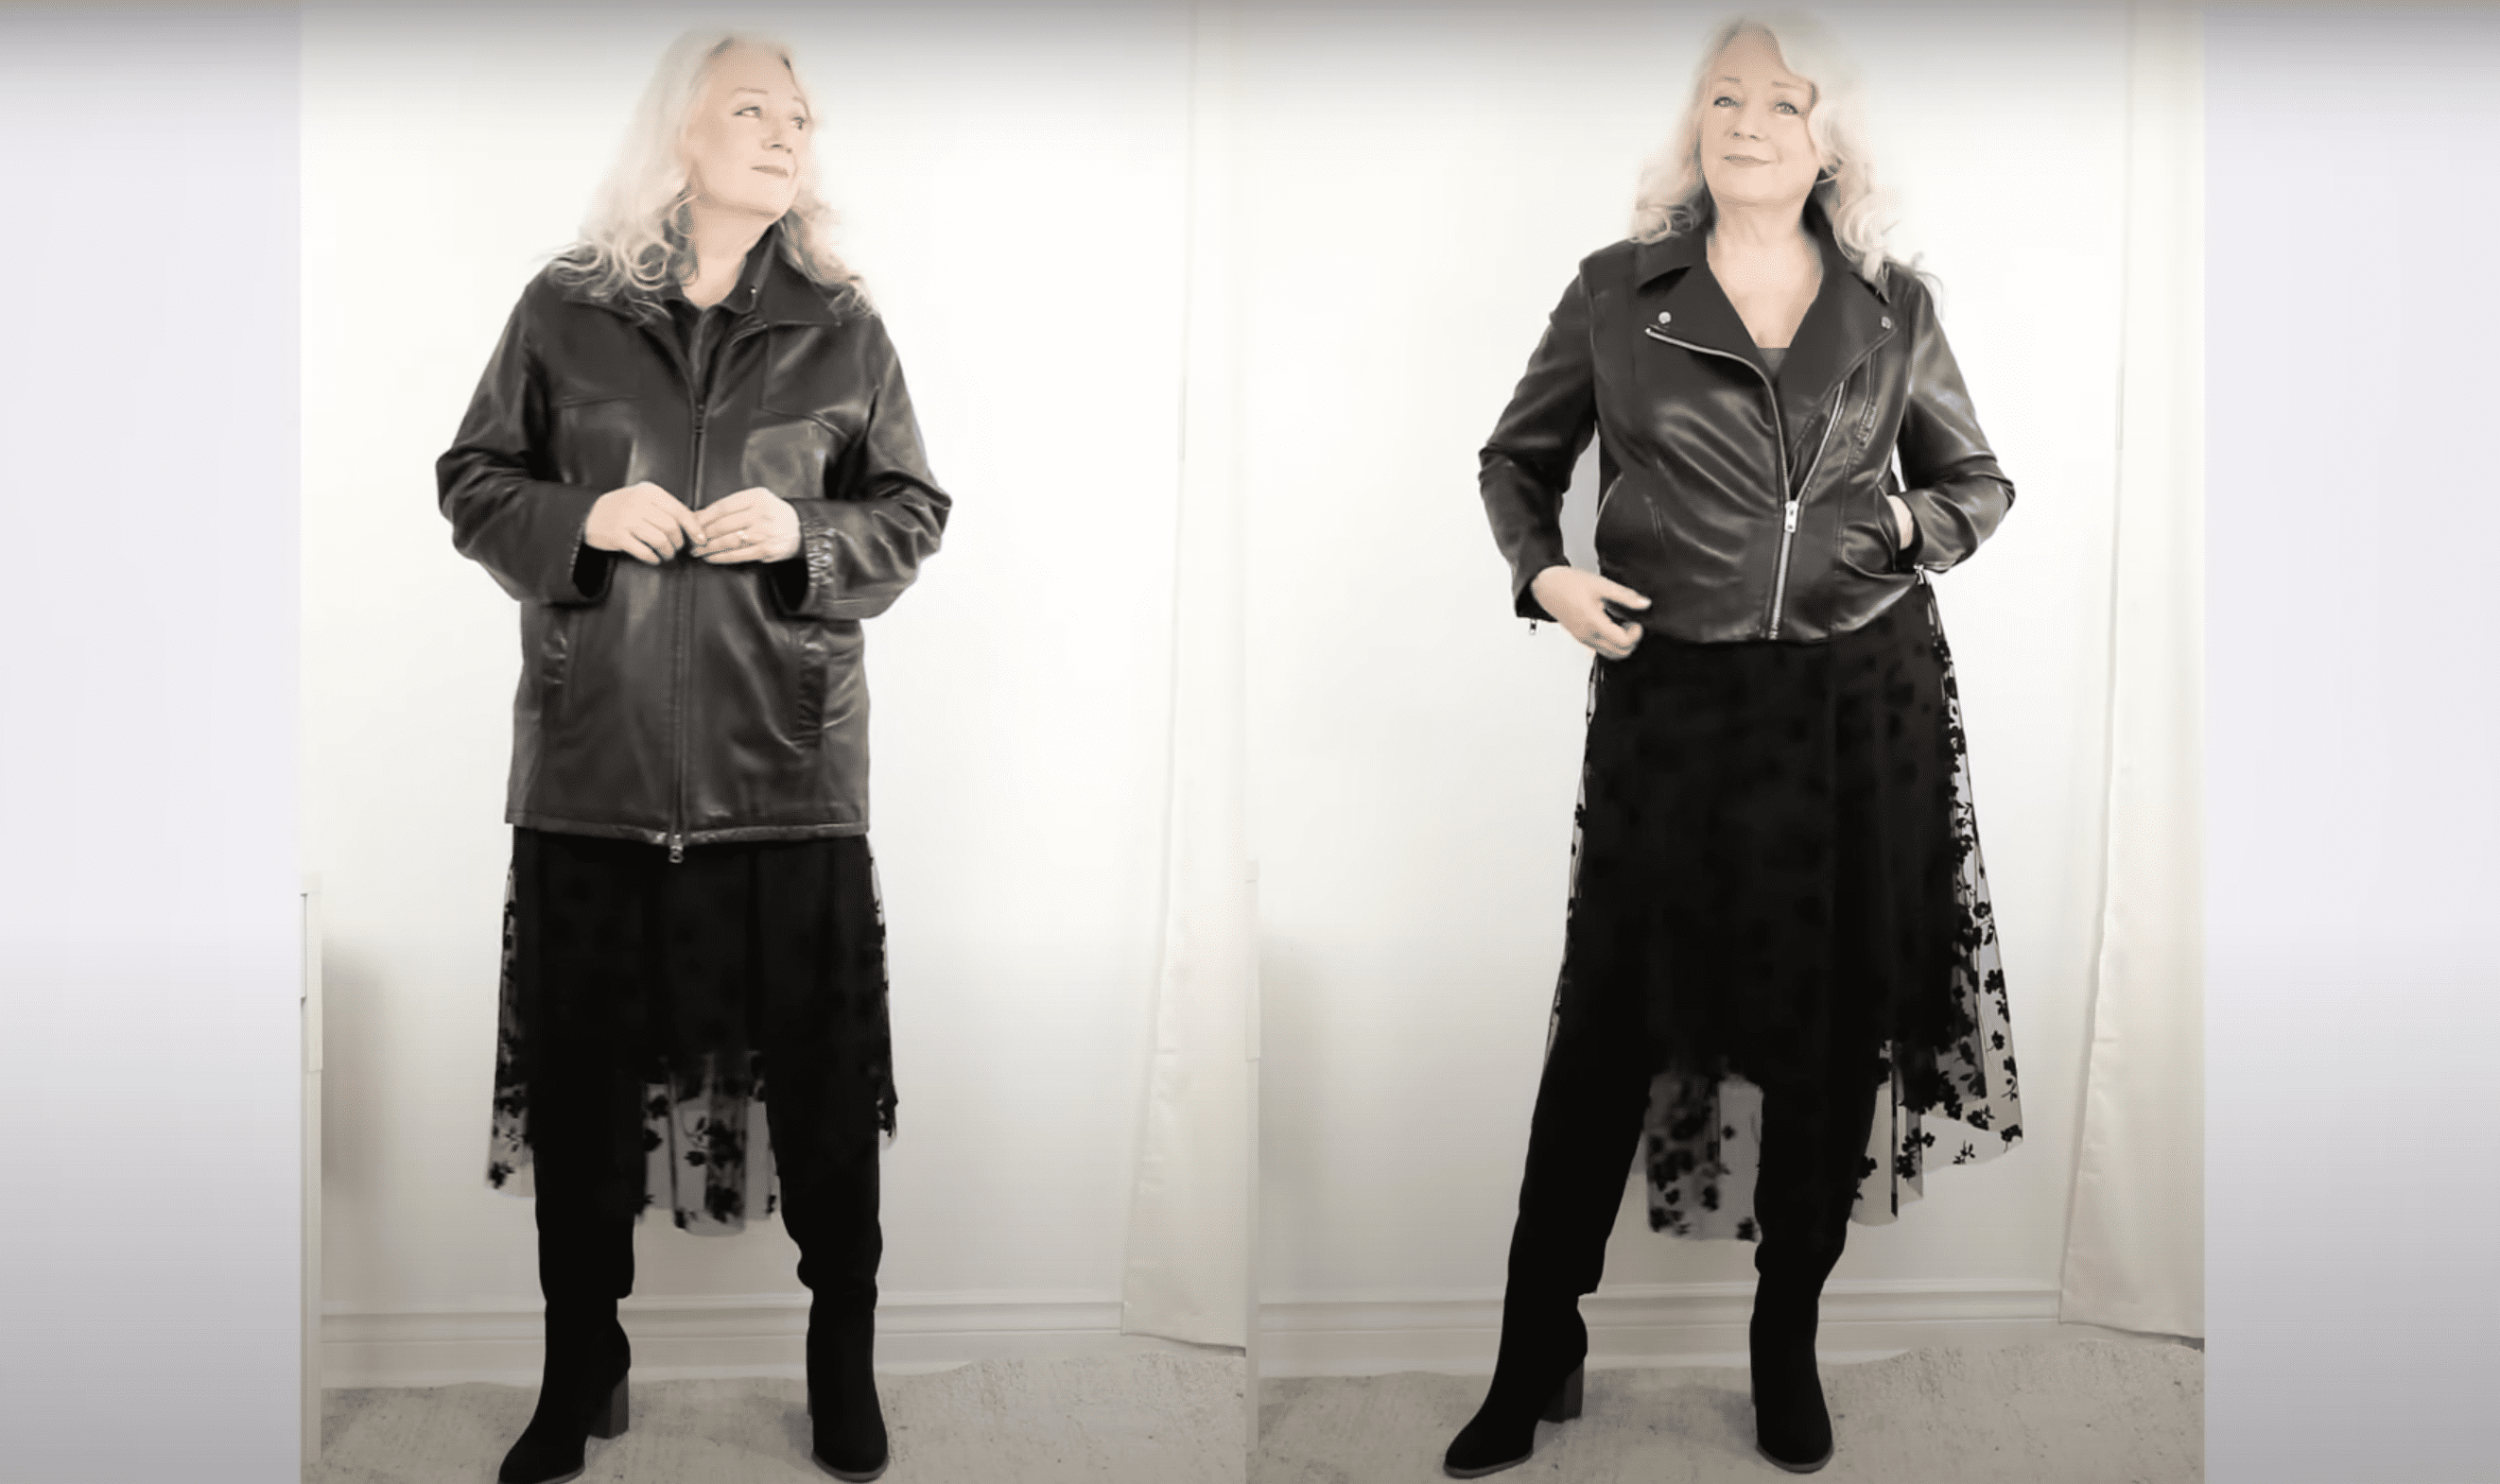 Heather portant une vieille veste en cuir vs elle portant une nouvelle veste en similicuir à l'allure moderne | Source : YouTube.com/Awesomeover50